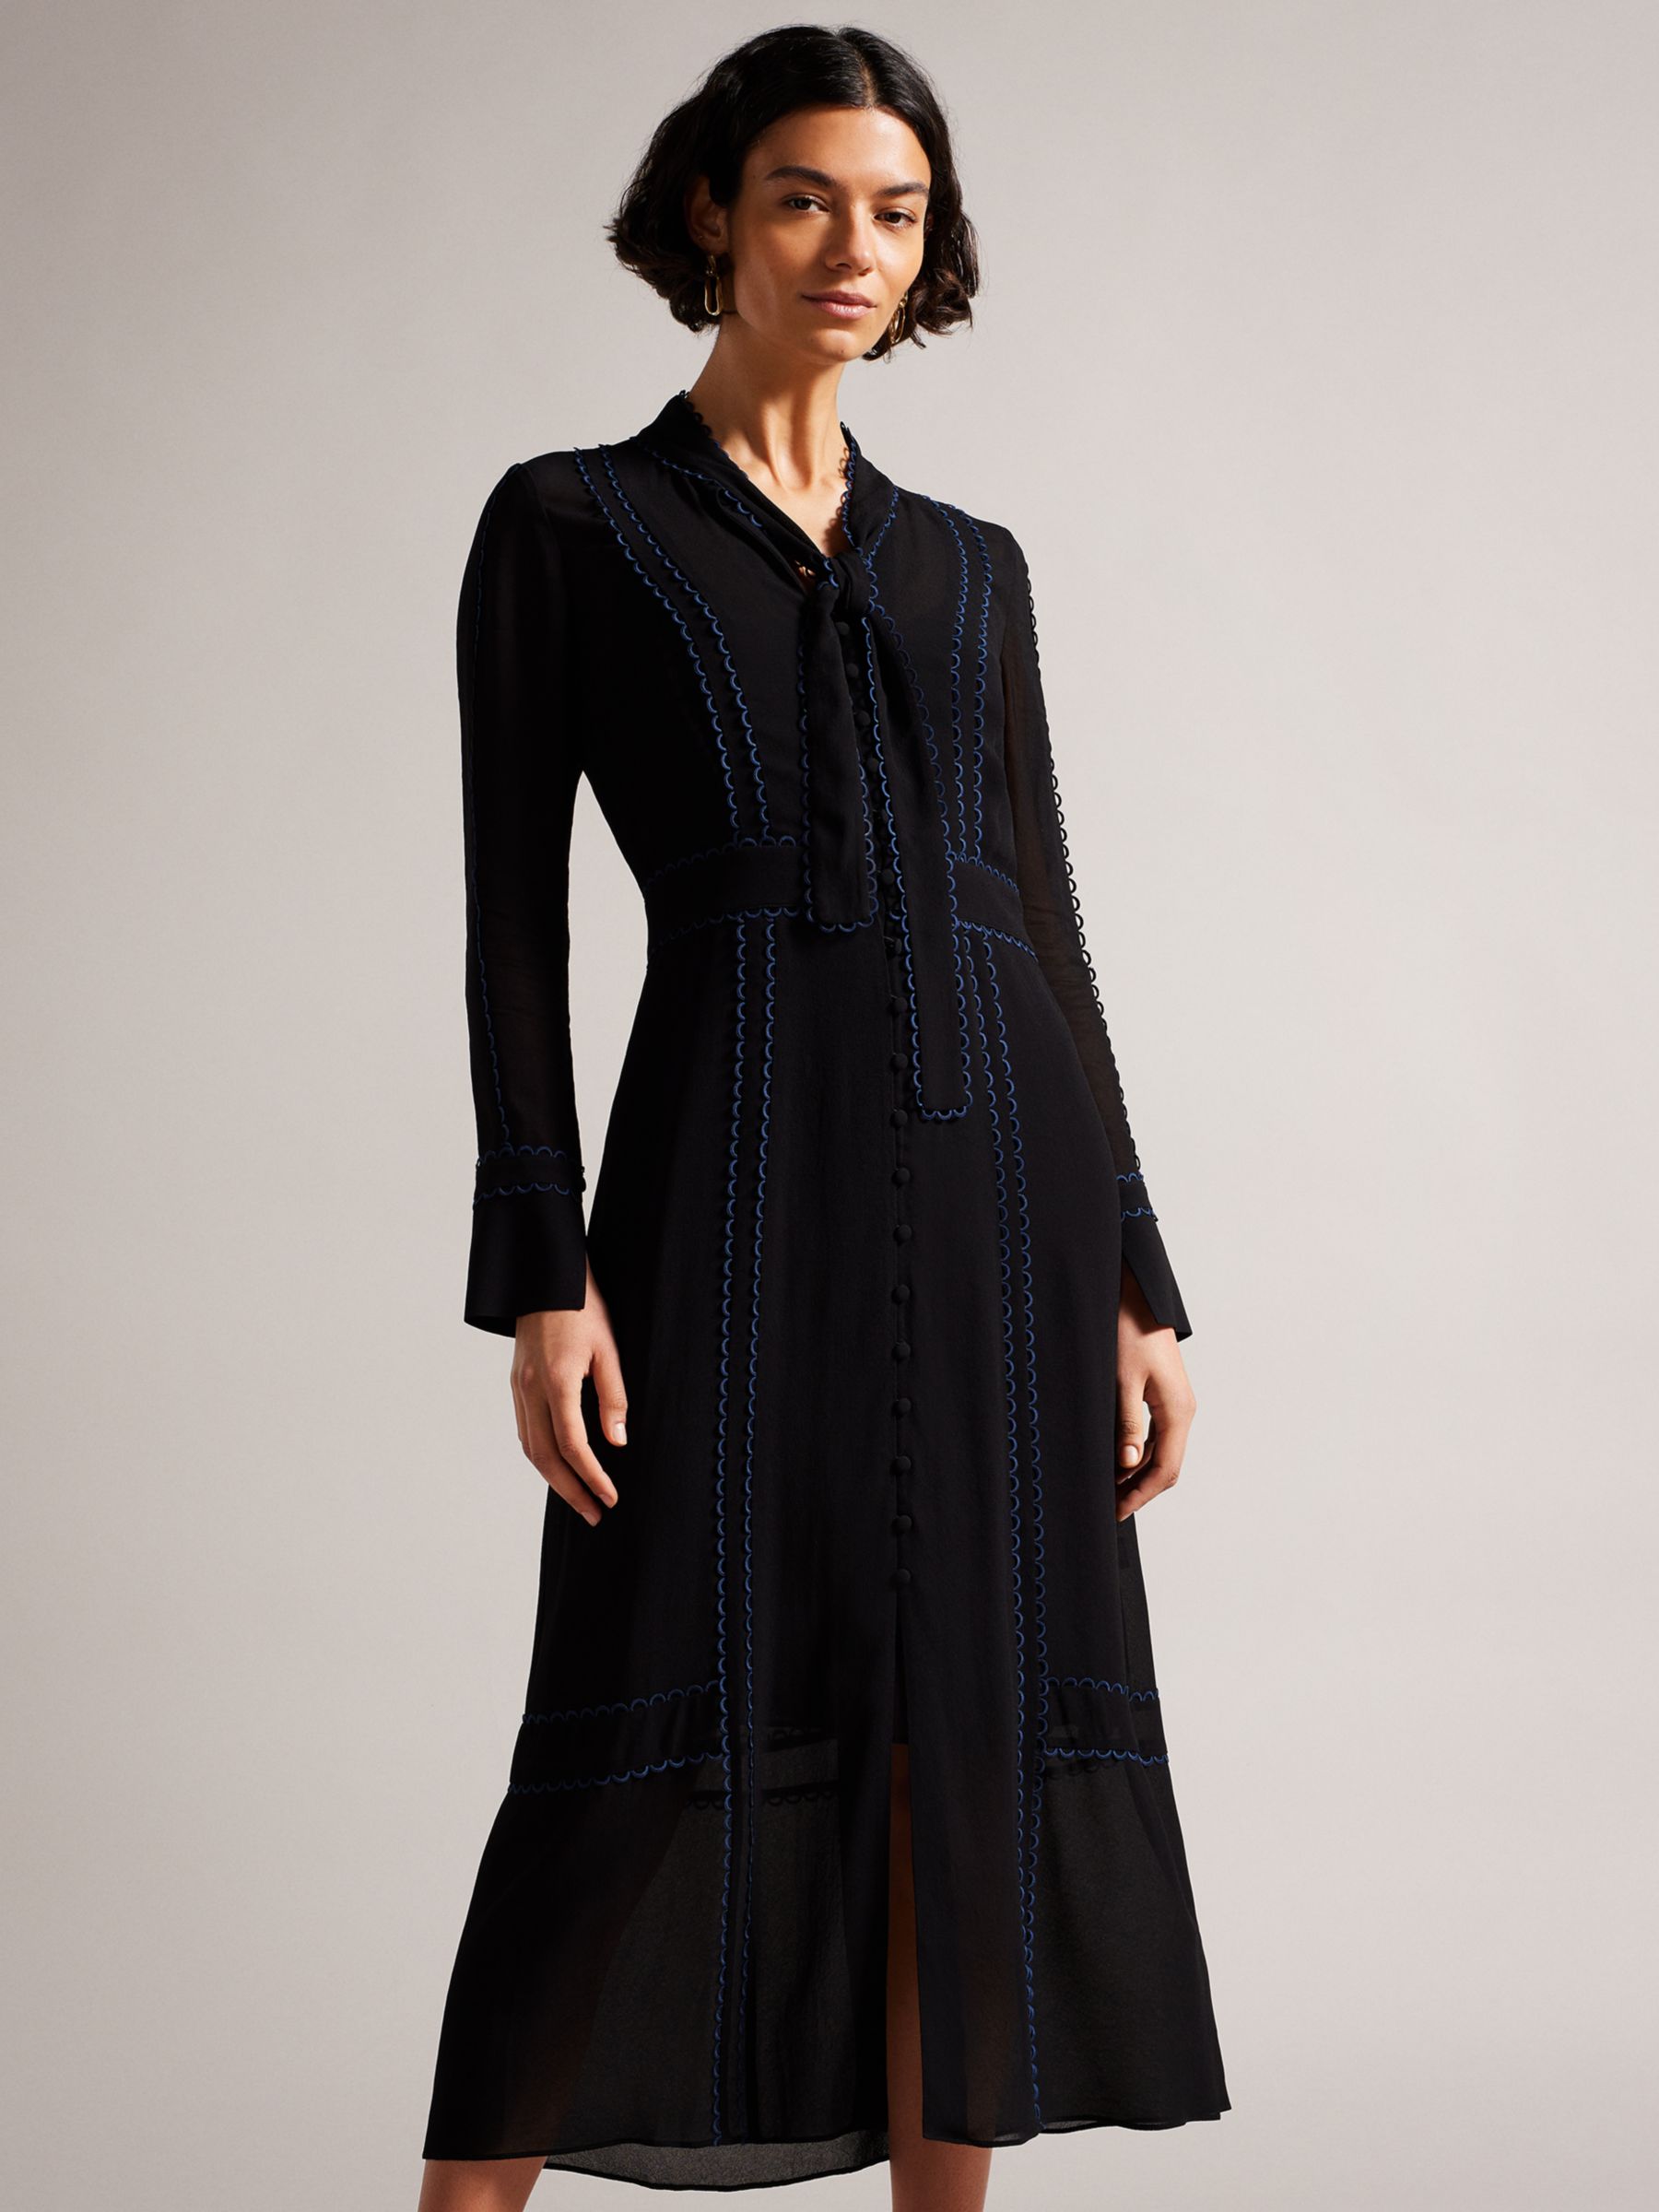 Ted Baker Claiirr Shirt Dress, Black/Blue at John Lewis & Partners